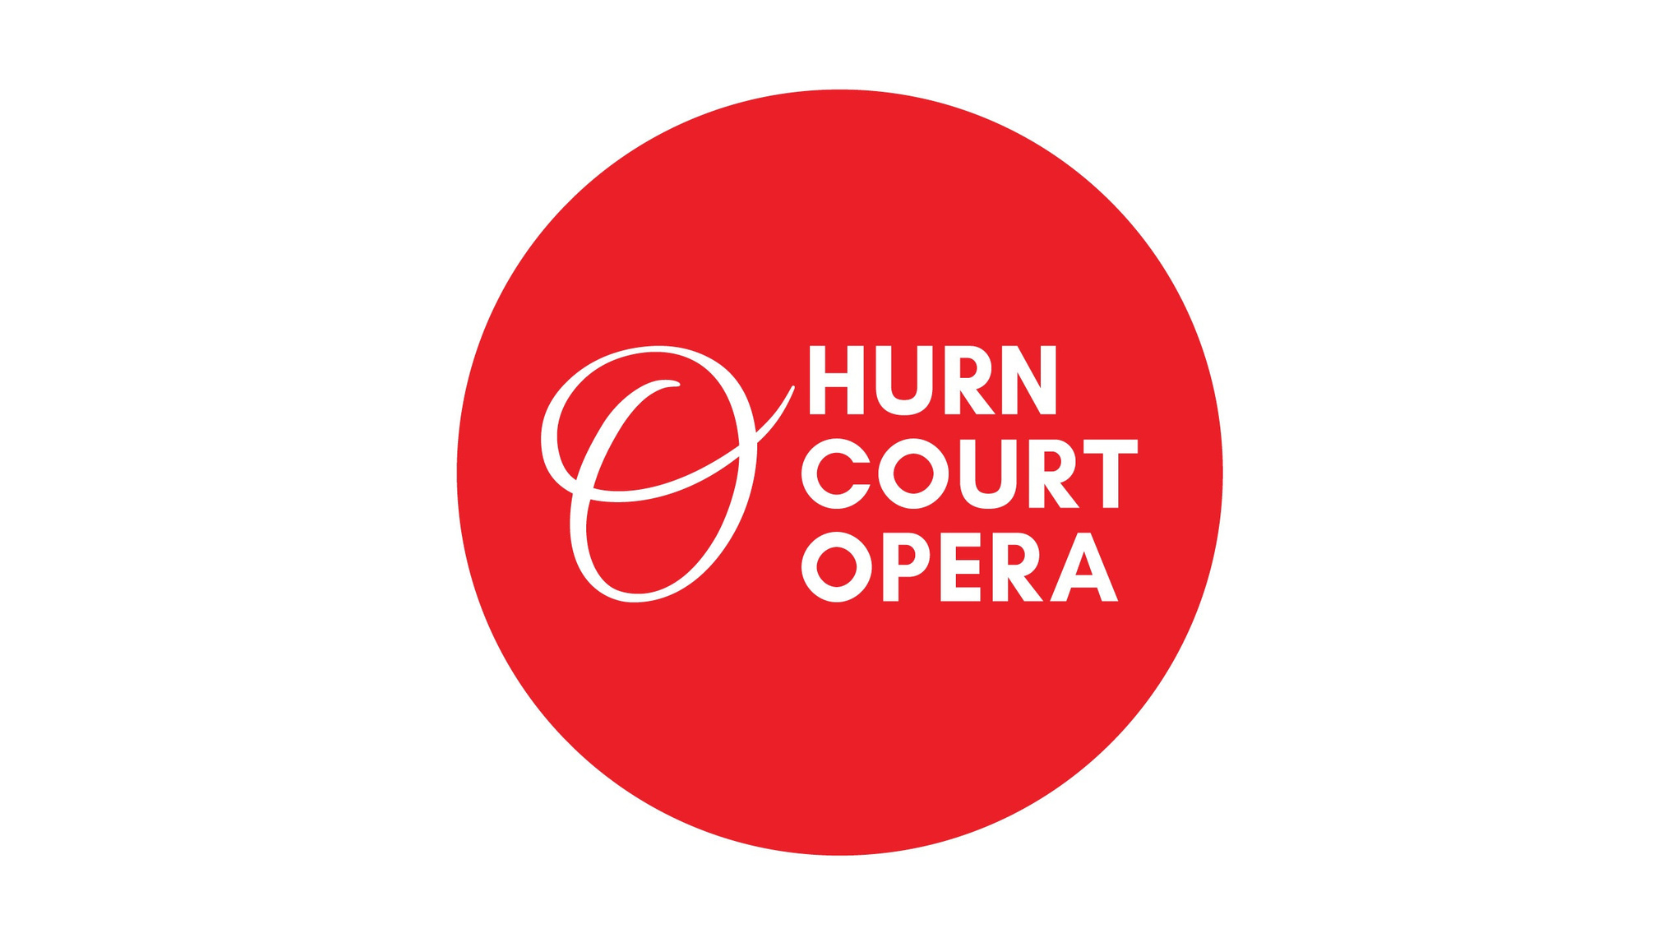 Hurn Court Opera logo